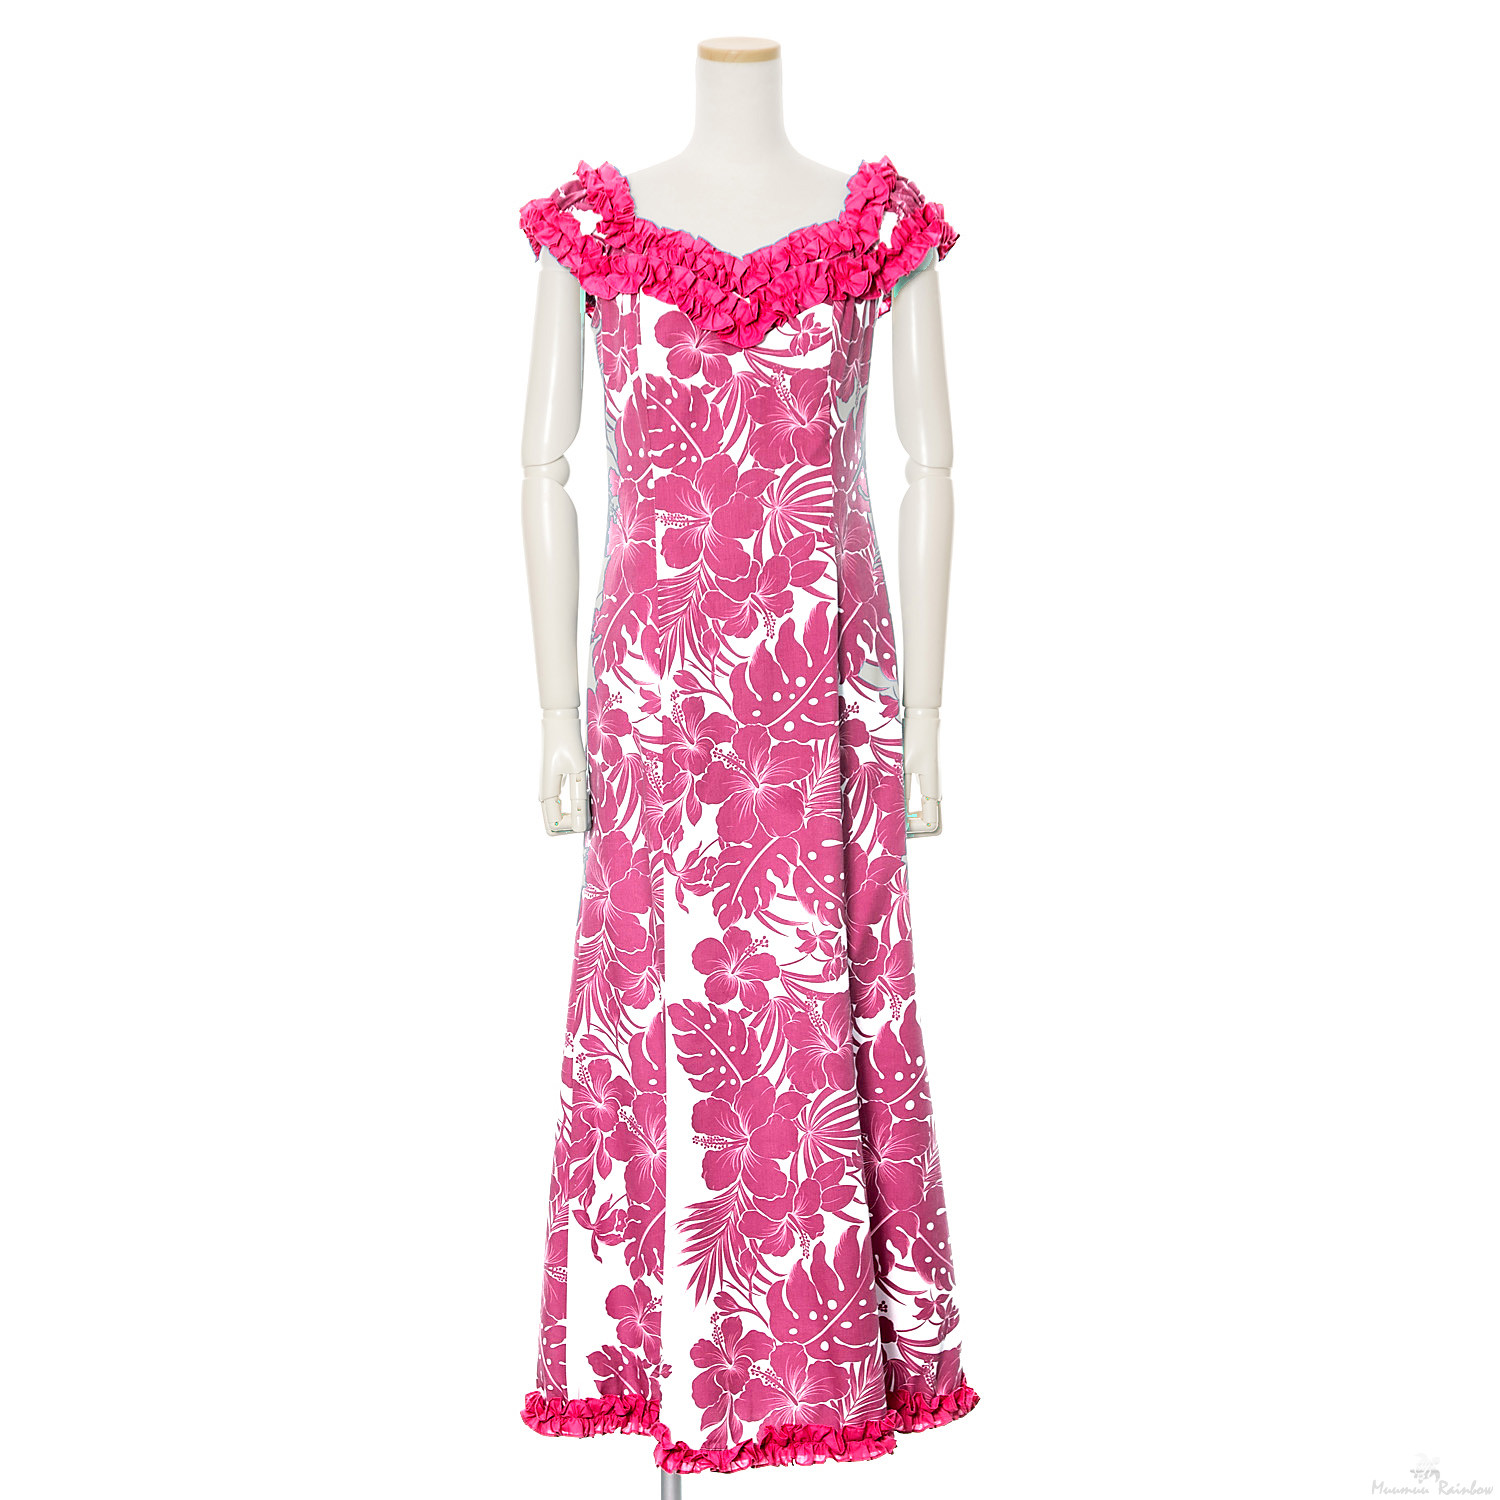 Rcd1p ハイビスカス ロングドレス ピンク リゾートウェディング参列衣装は ムームーレインボー日本で宅配レンタル